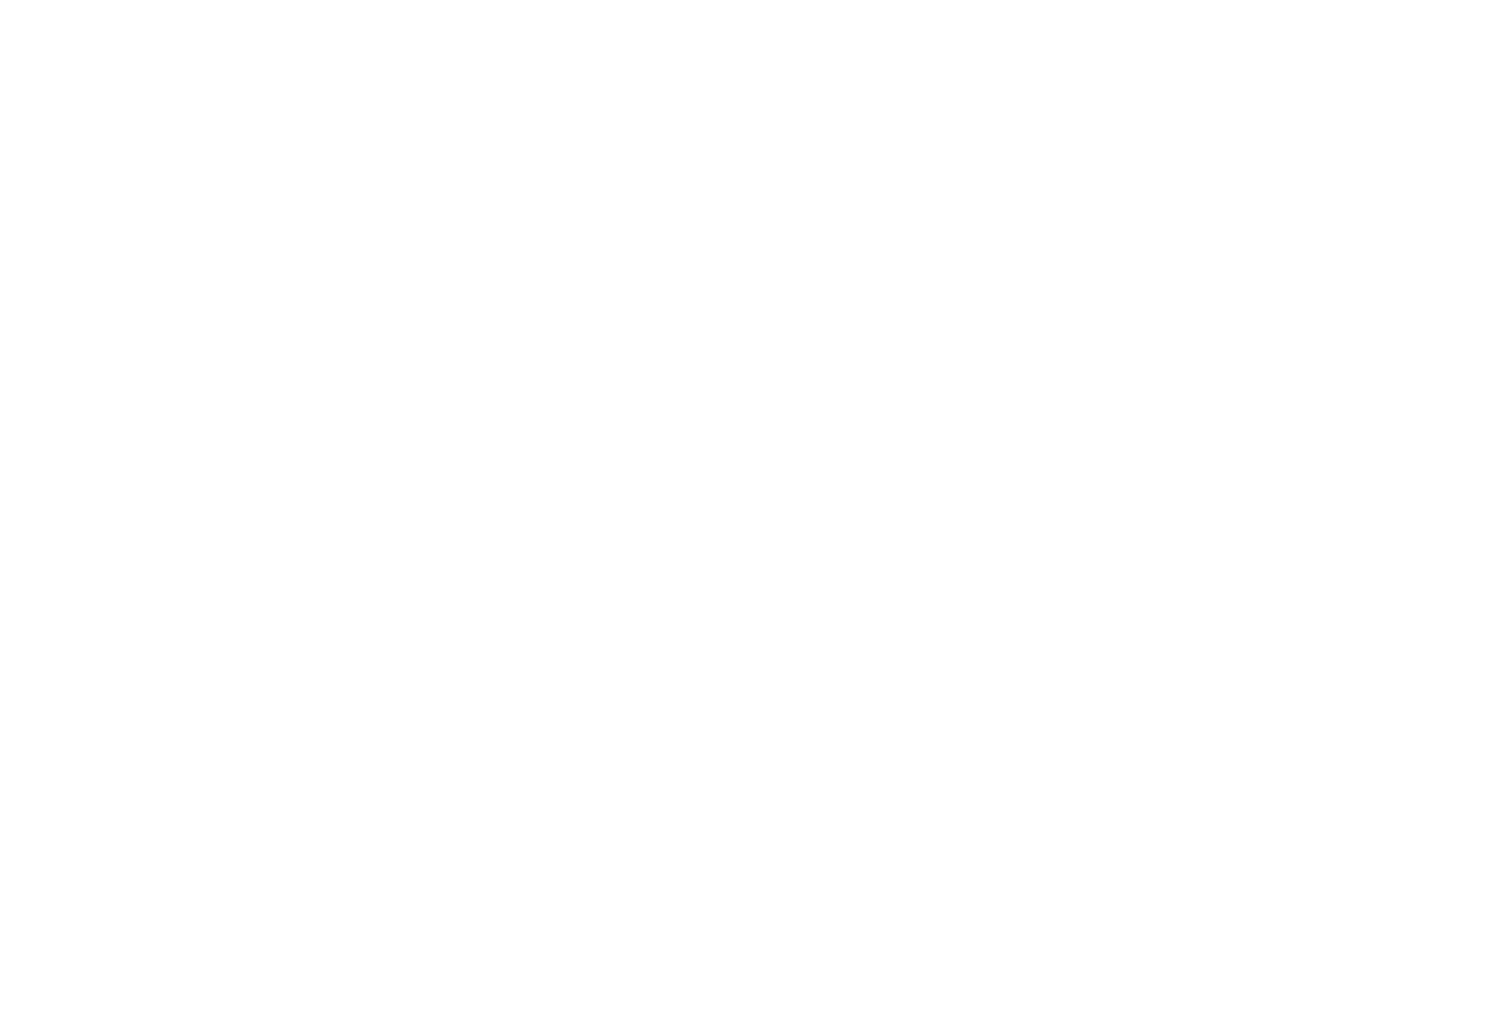 Sam Reece